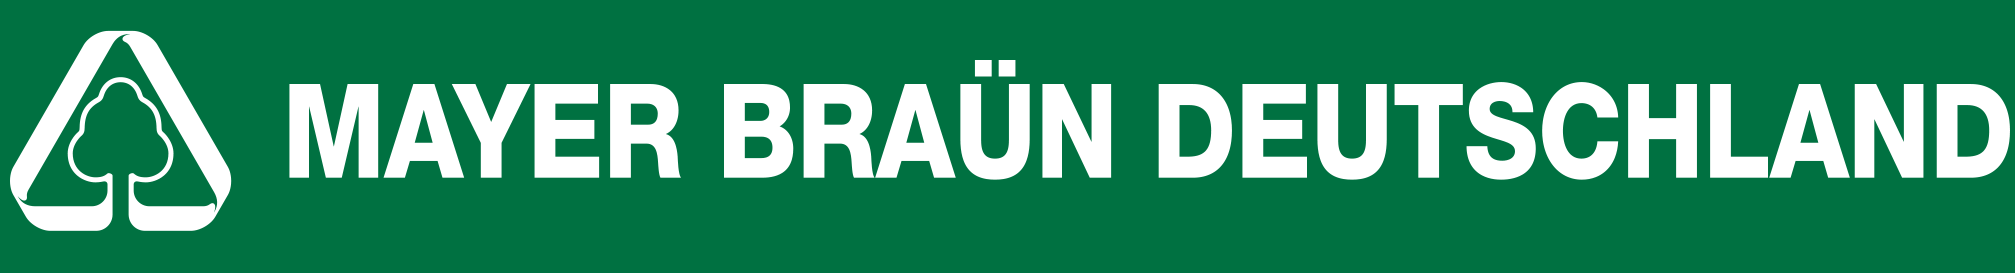 Mayer Braun